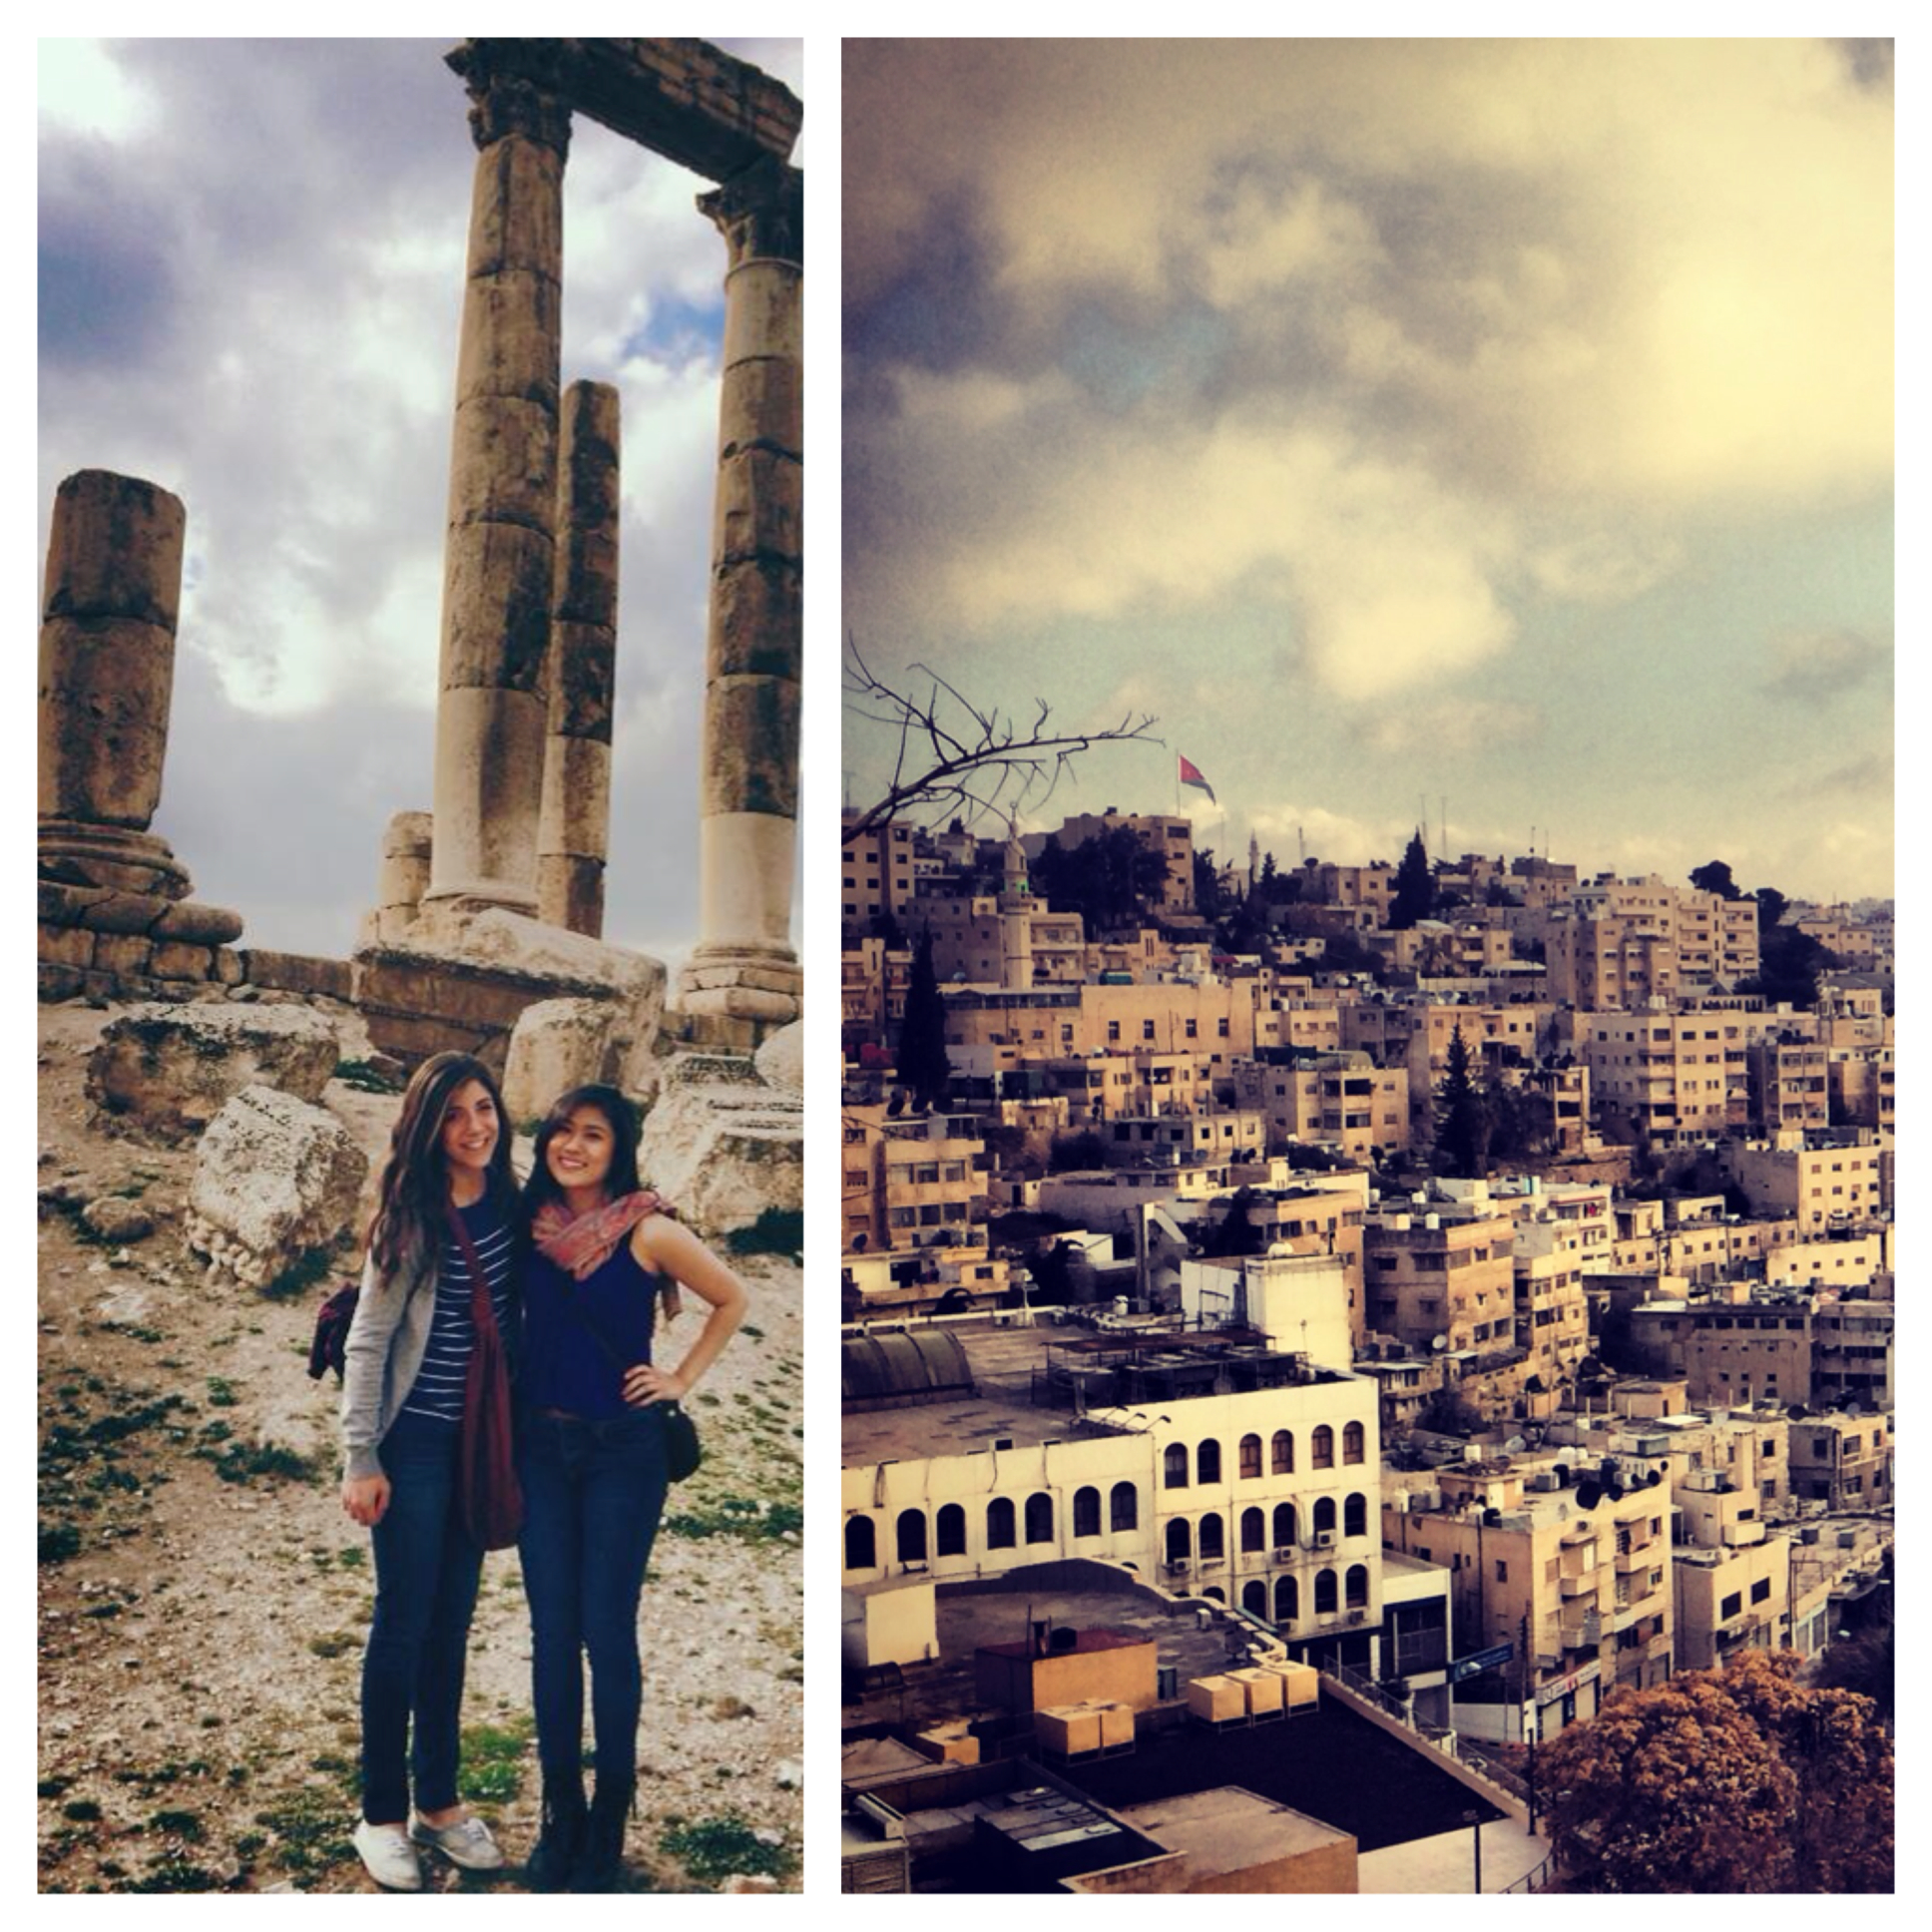 Views from the Citadel in Amman, Jordan